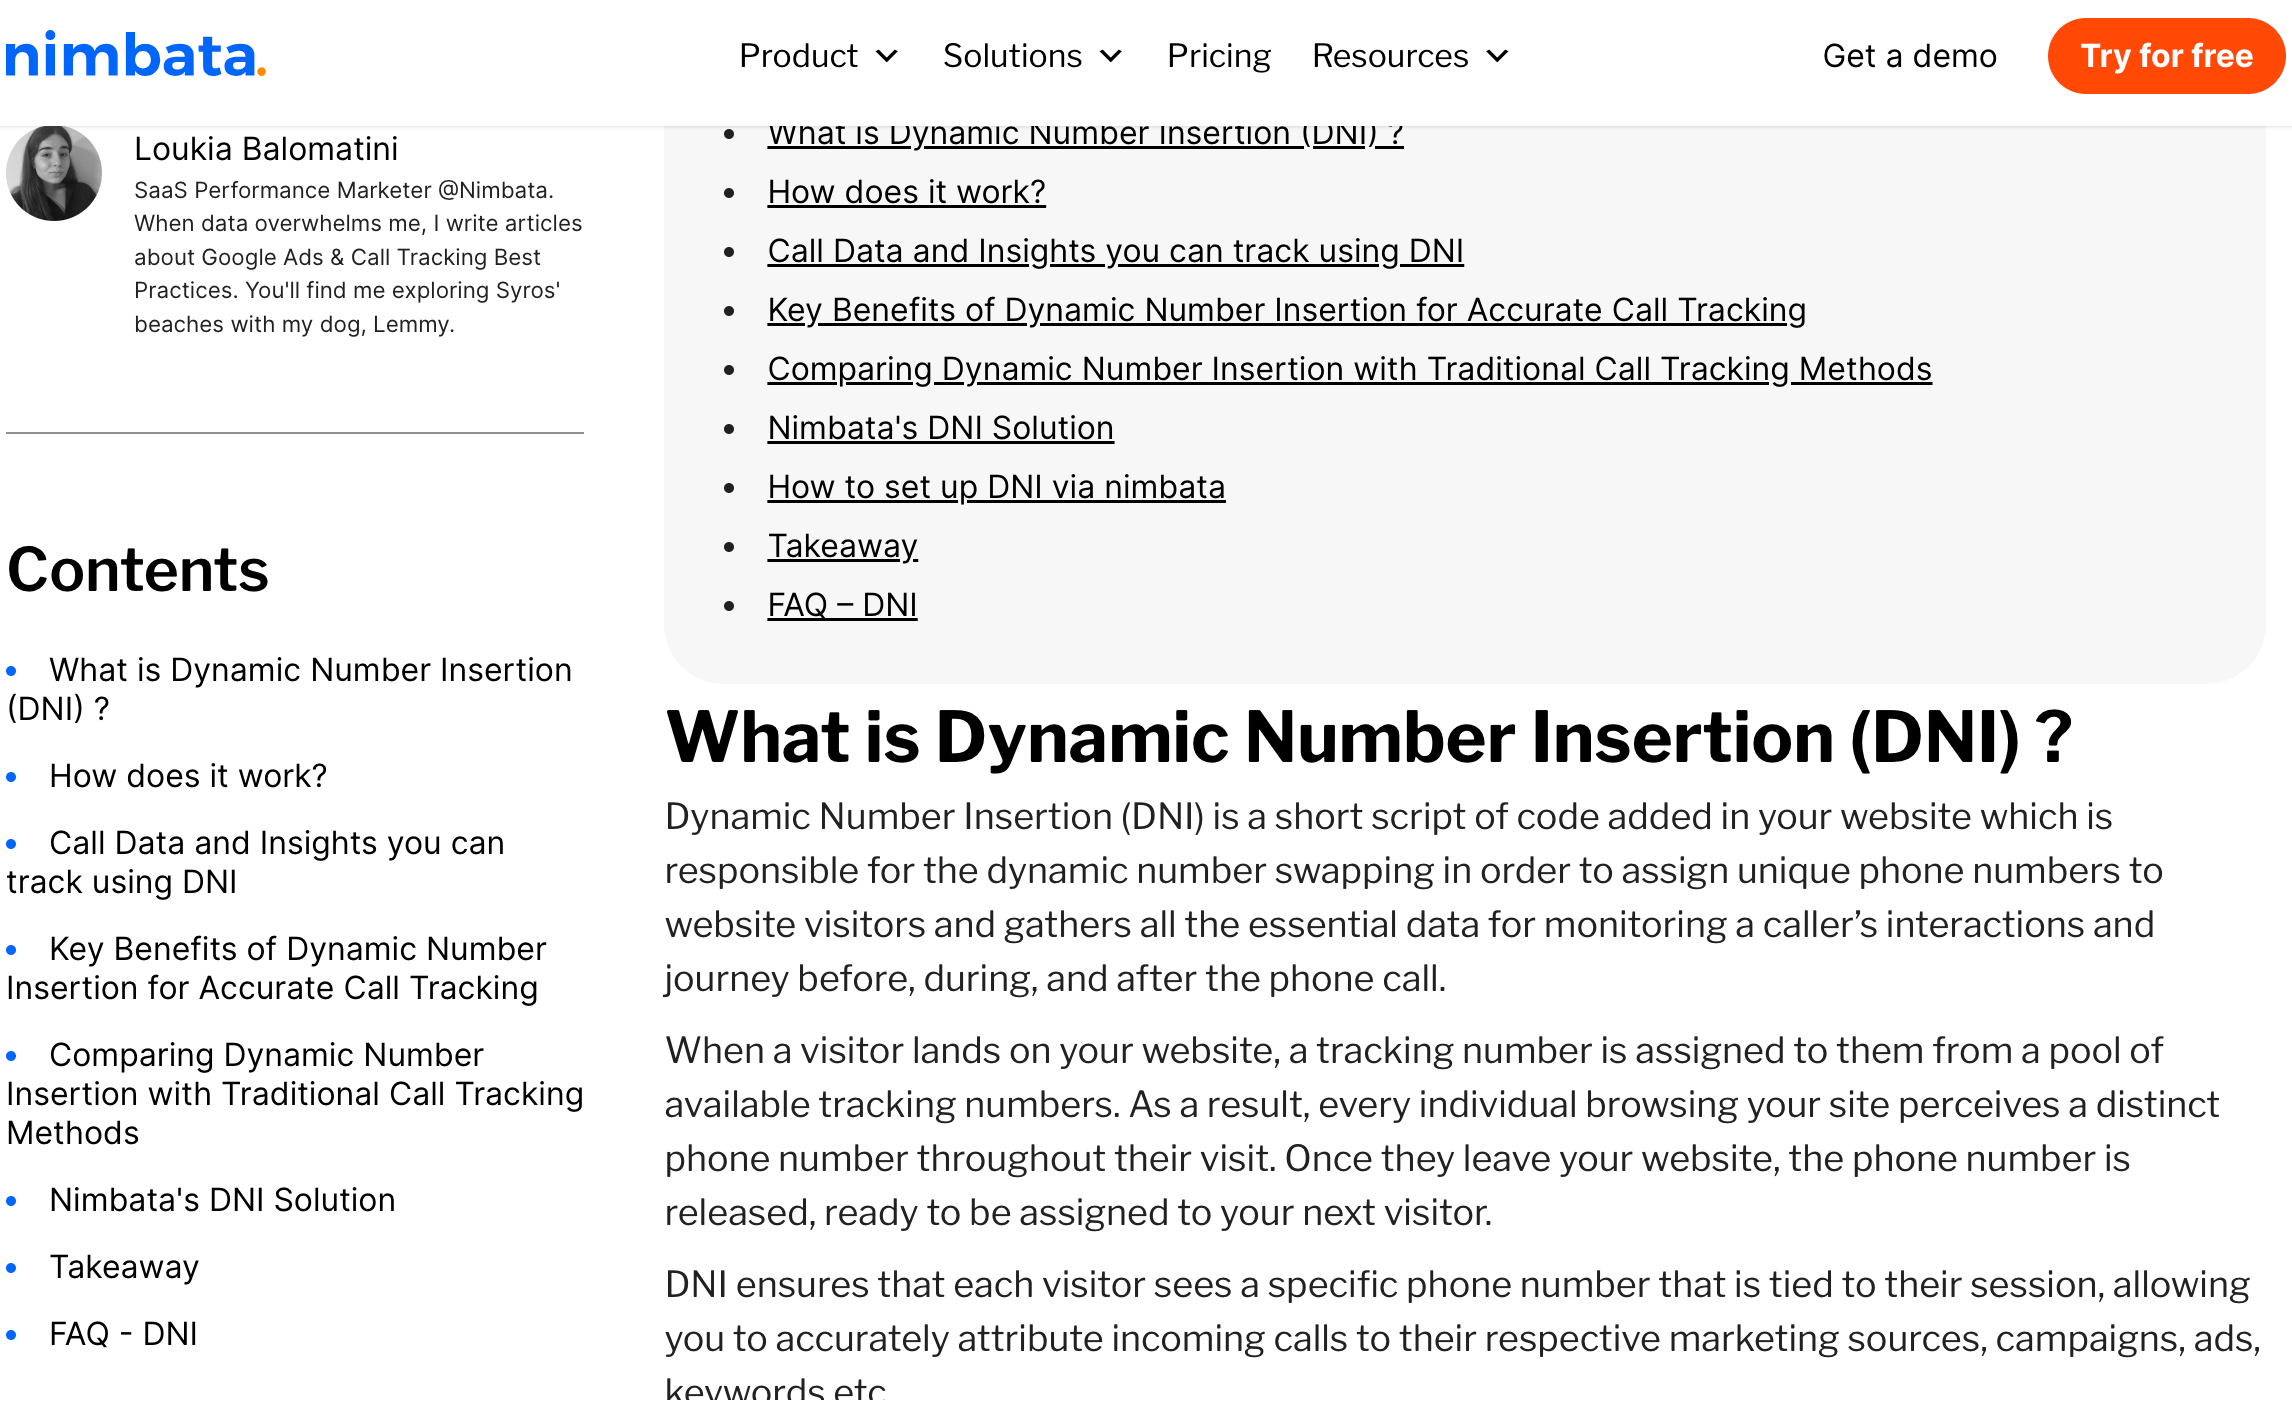 nimbata dynamic number insertion